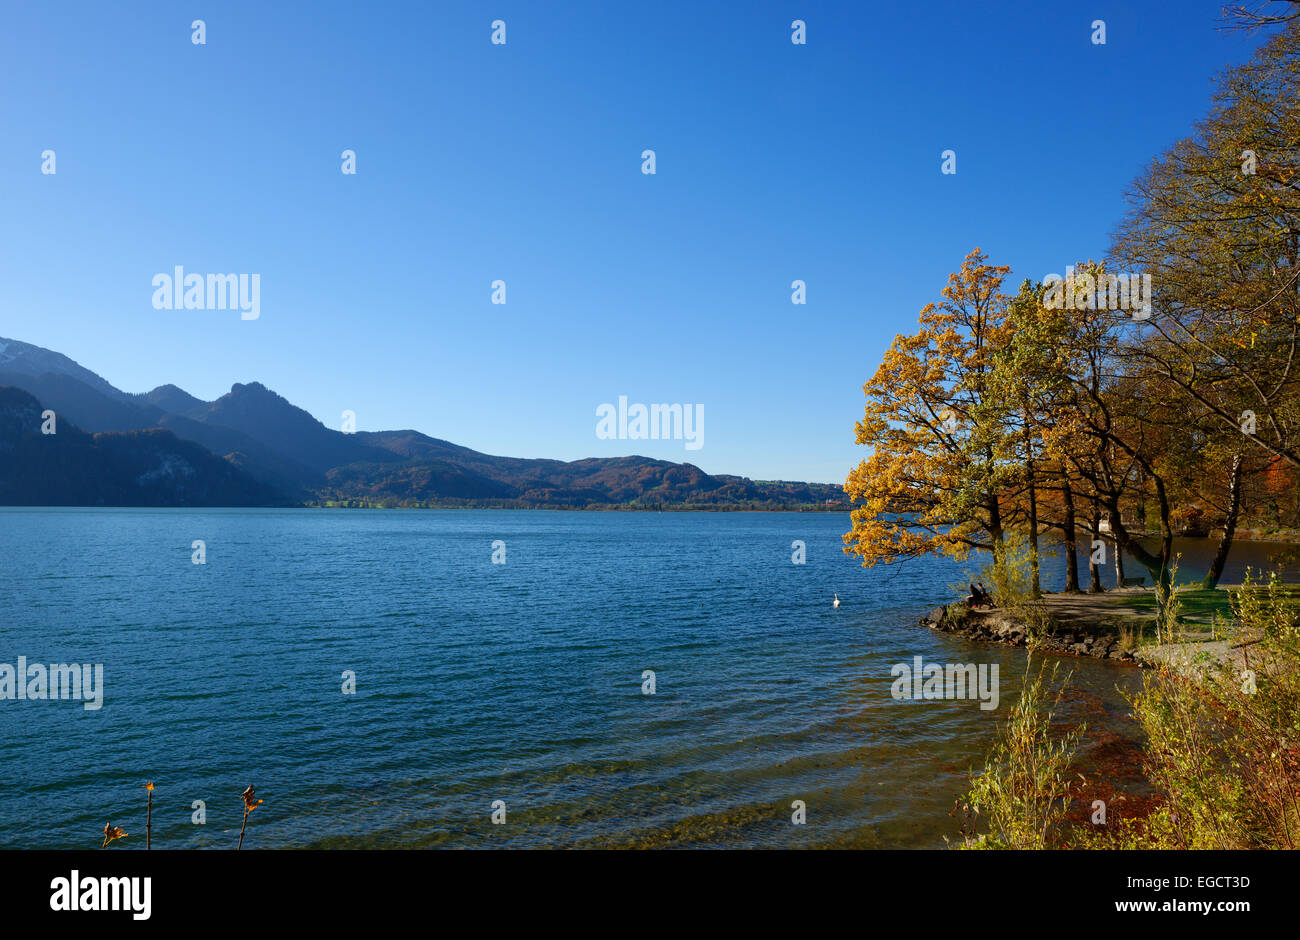 Autumn at Lake Kochel or Kochelsee Lake, Kochel am See, Upper Bavaria, Bavaria, Germany Stock Photo